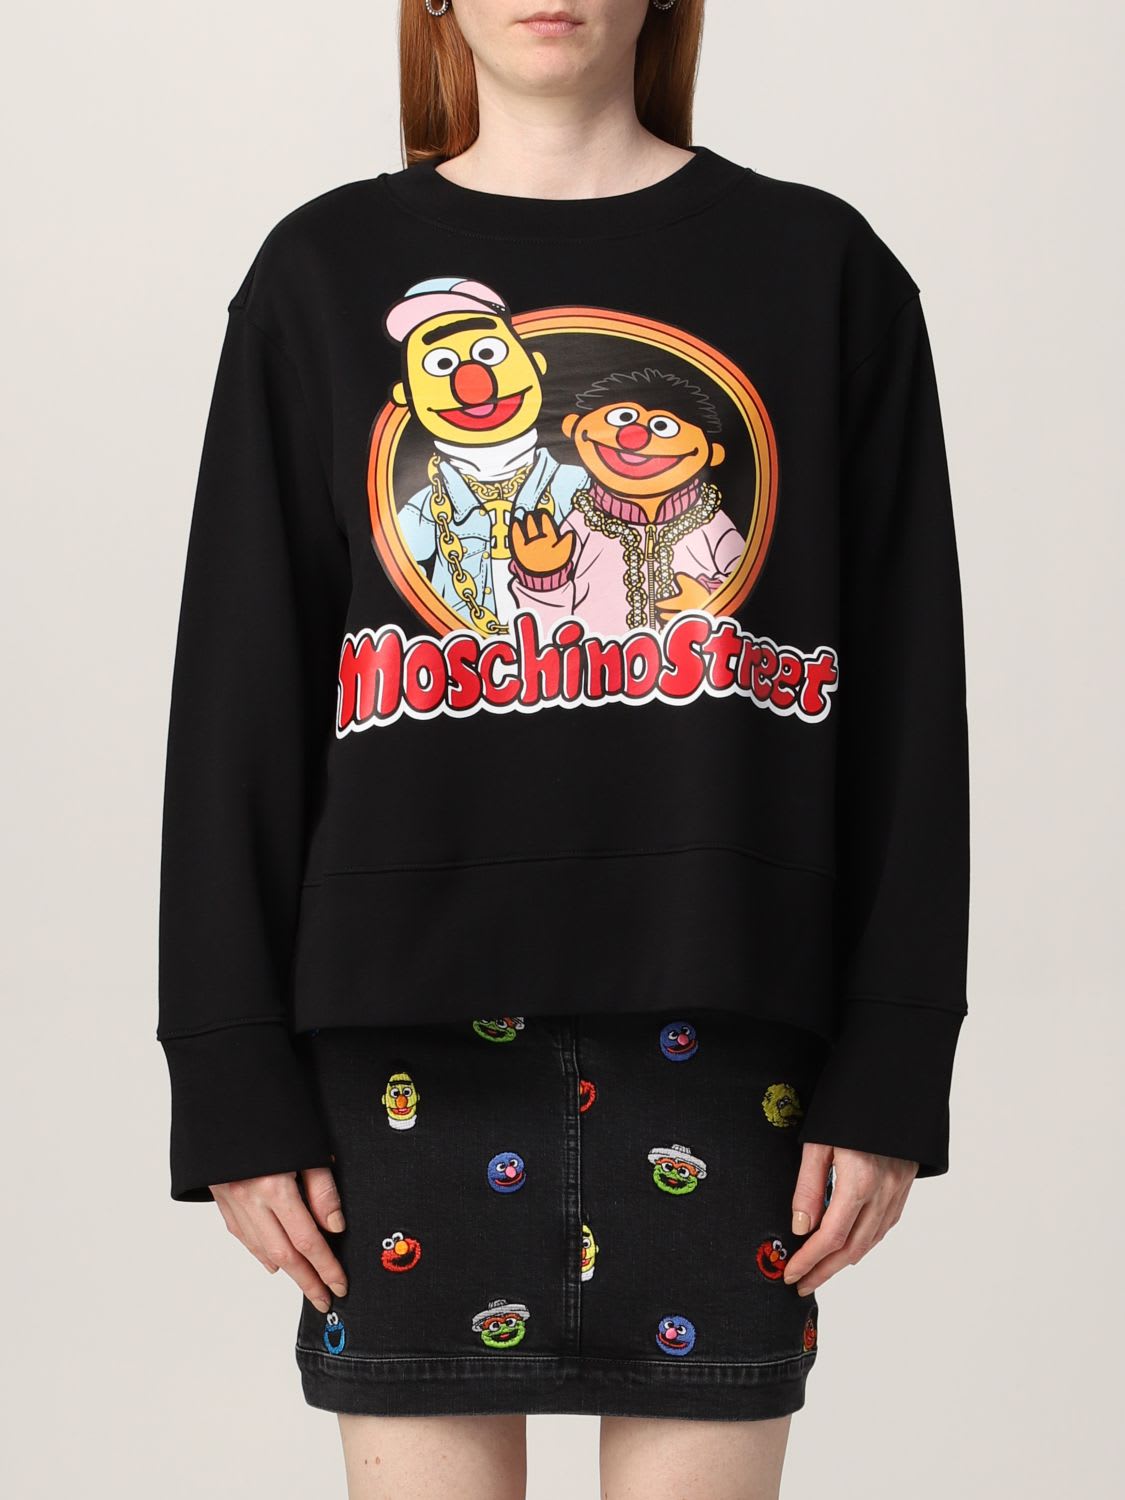 Moschino Couture Sweatshirt Sesame Street Moschino Couture Cotton Sweatshirt